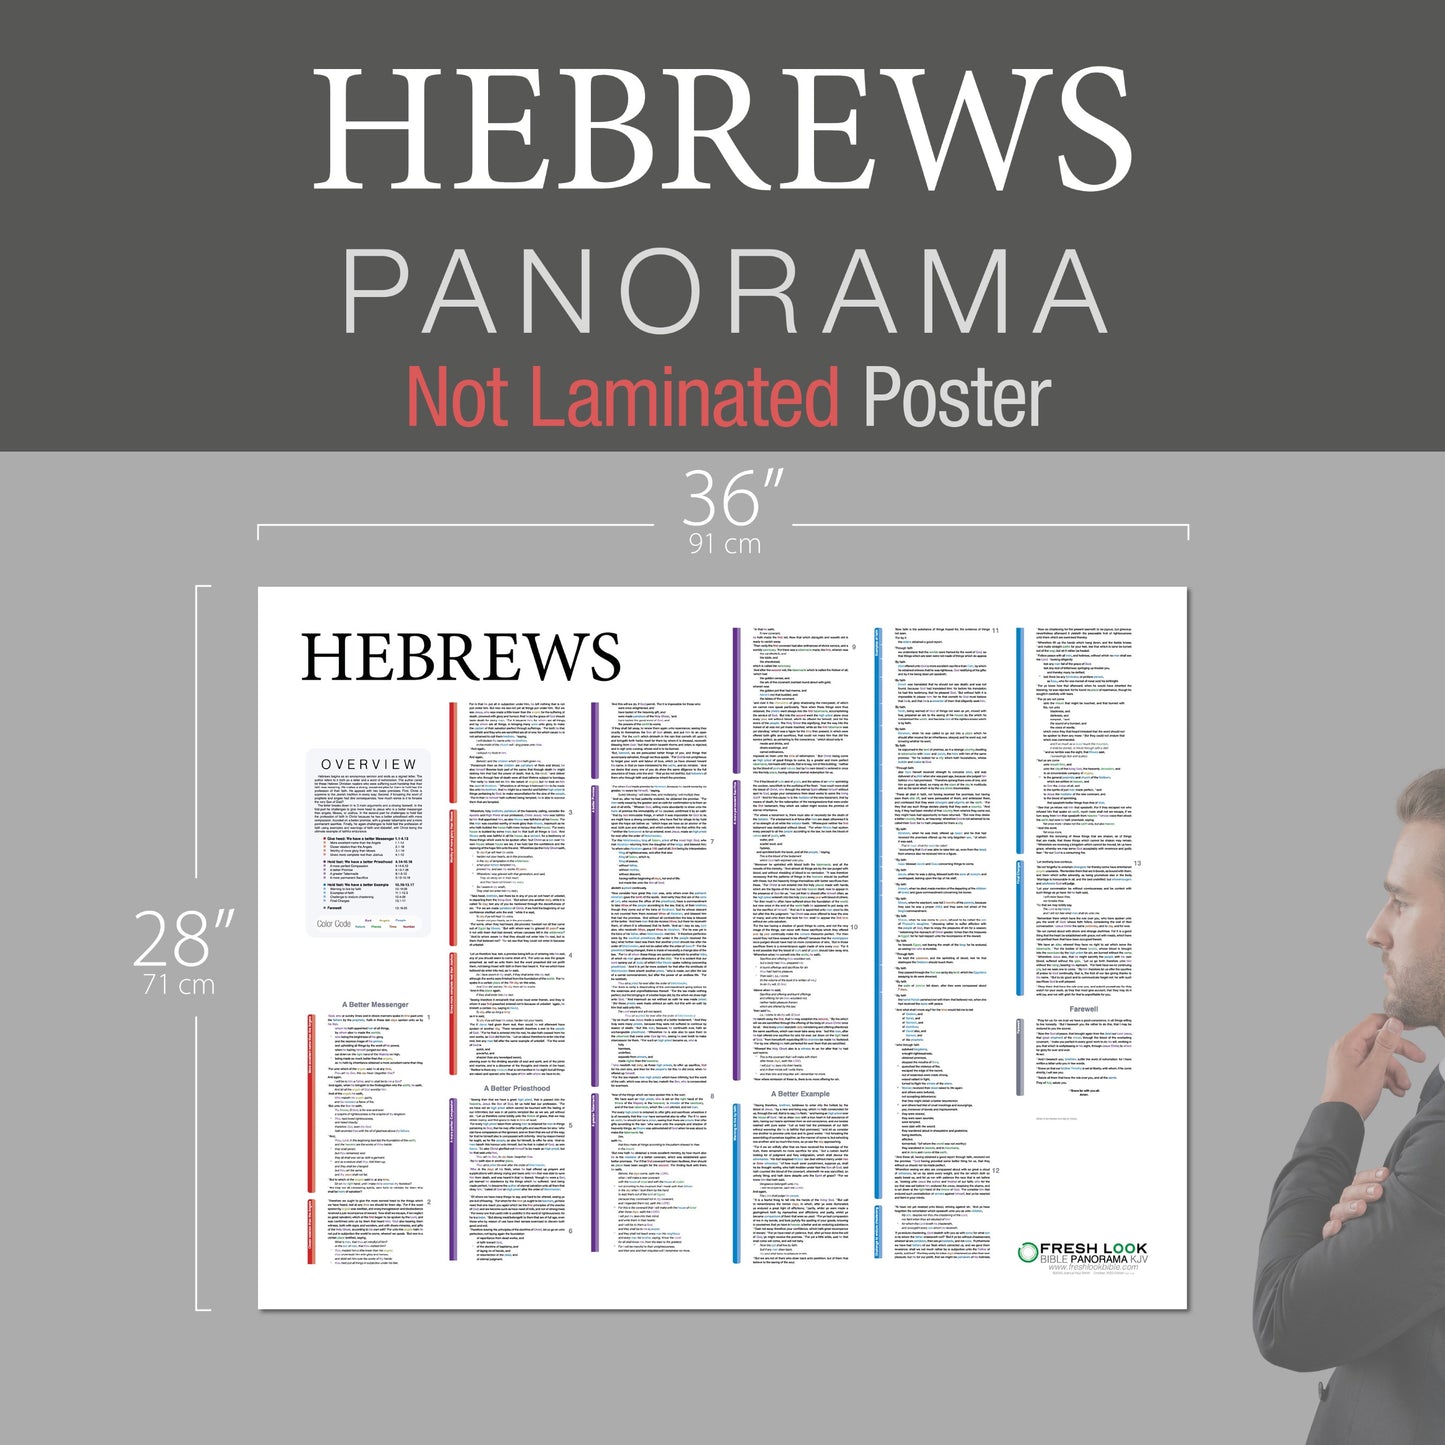 Hebrews Panorama Not Laminated